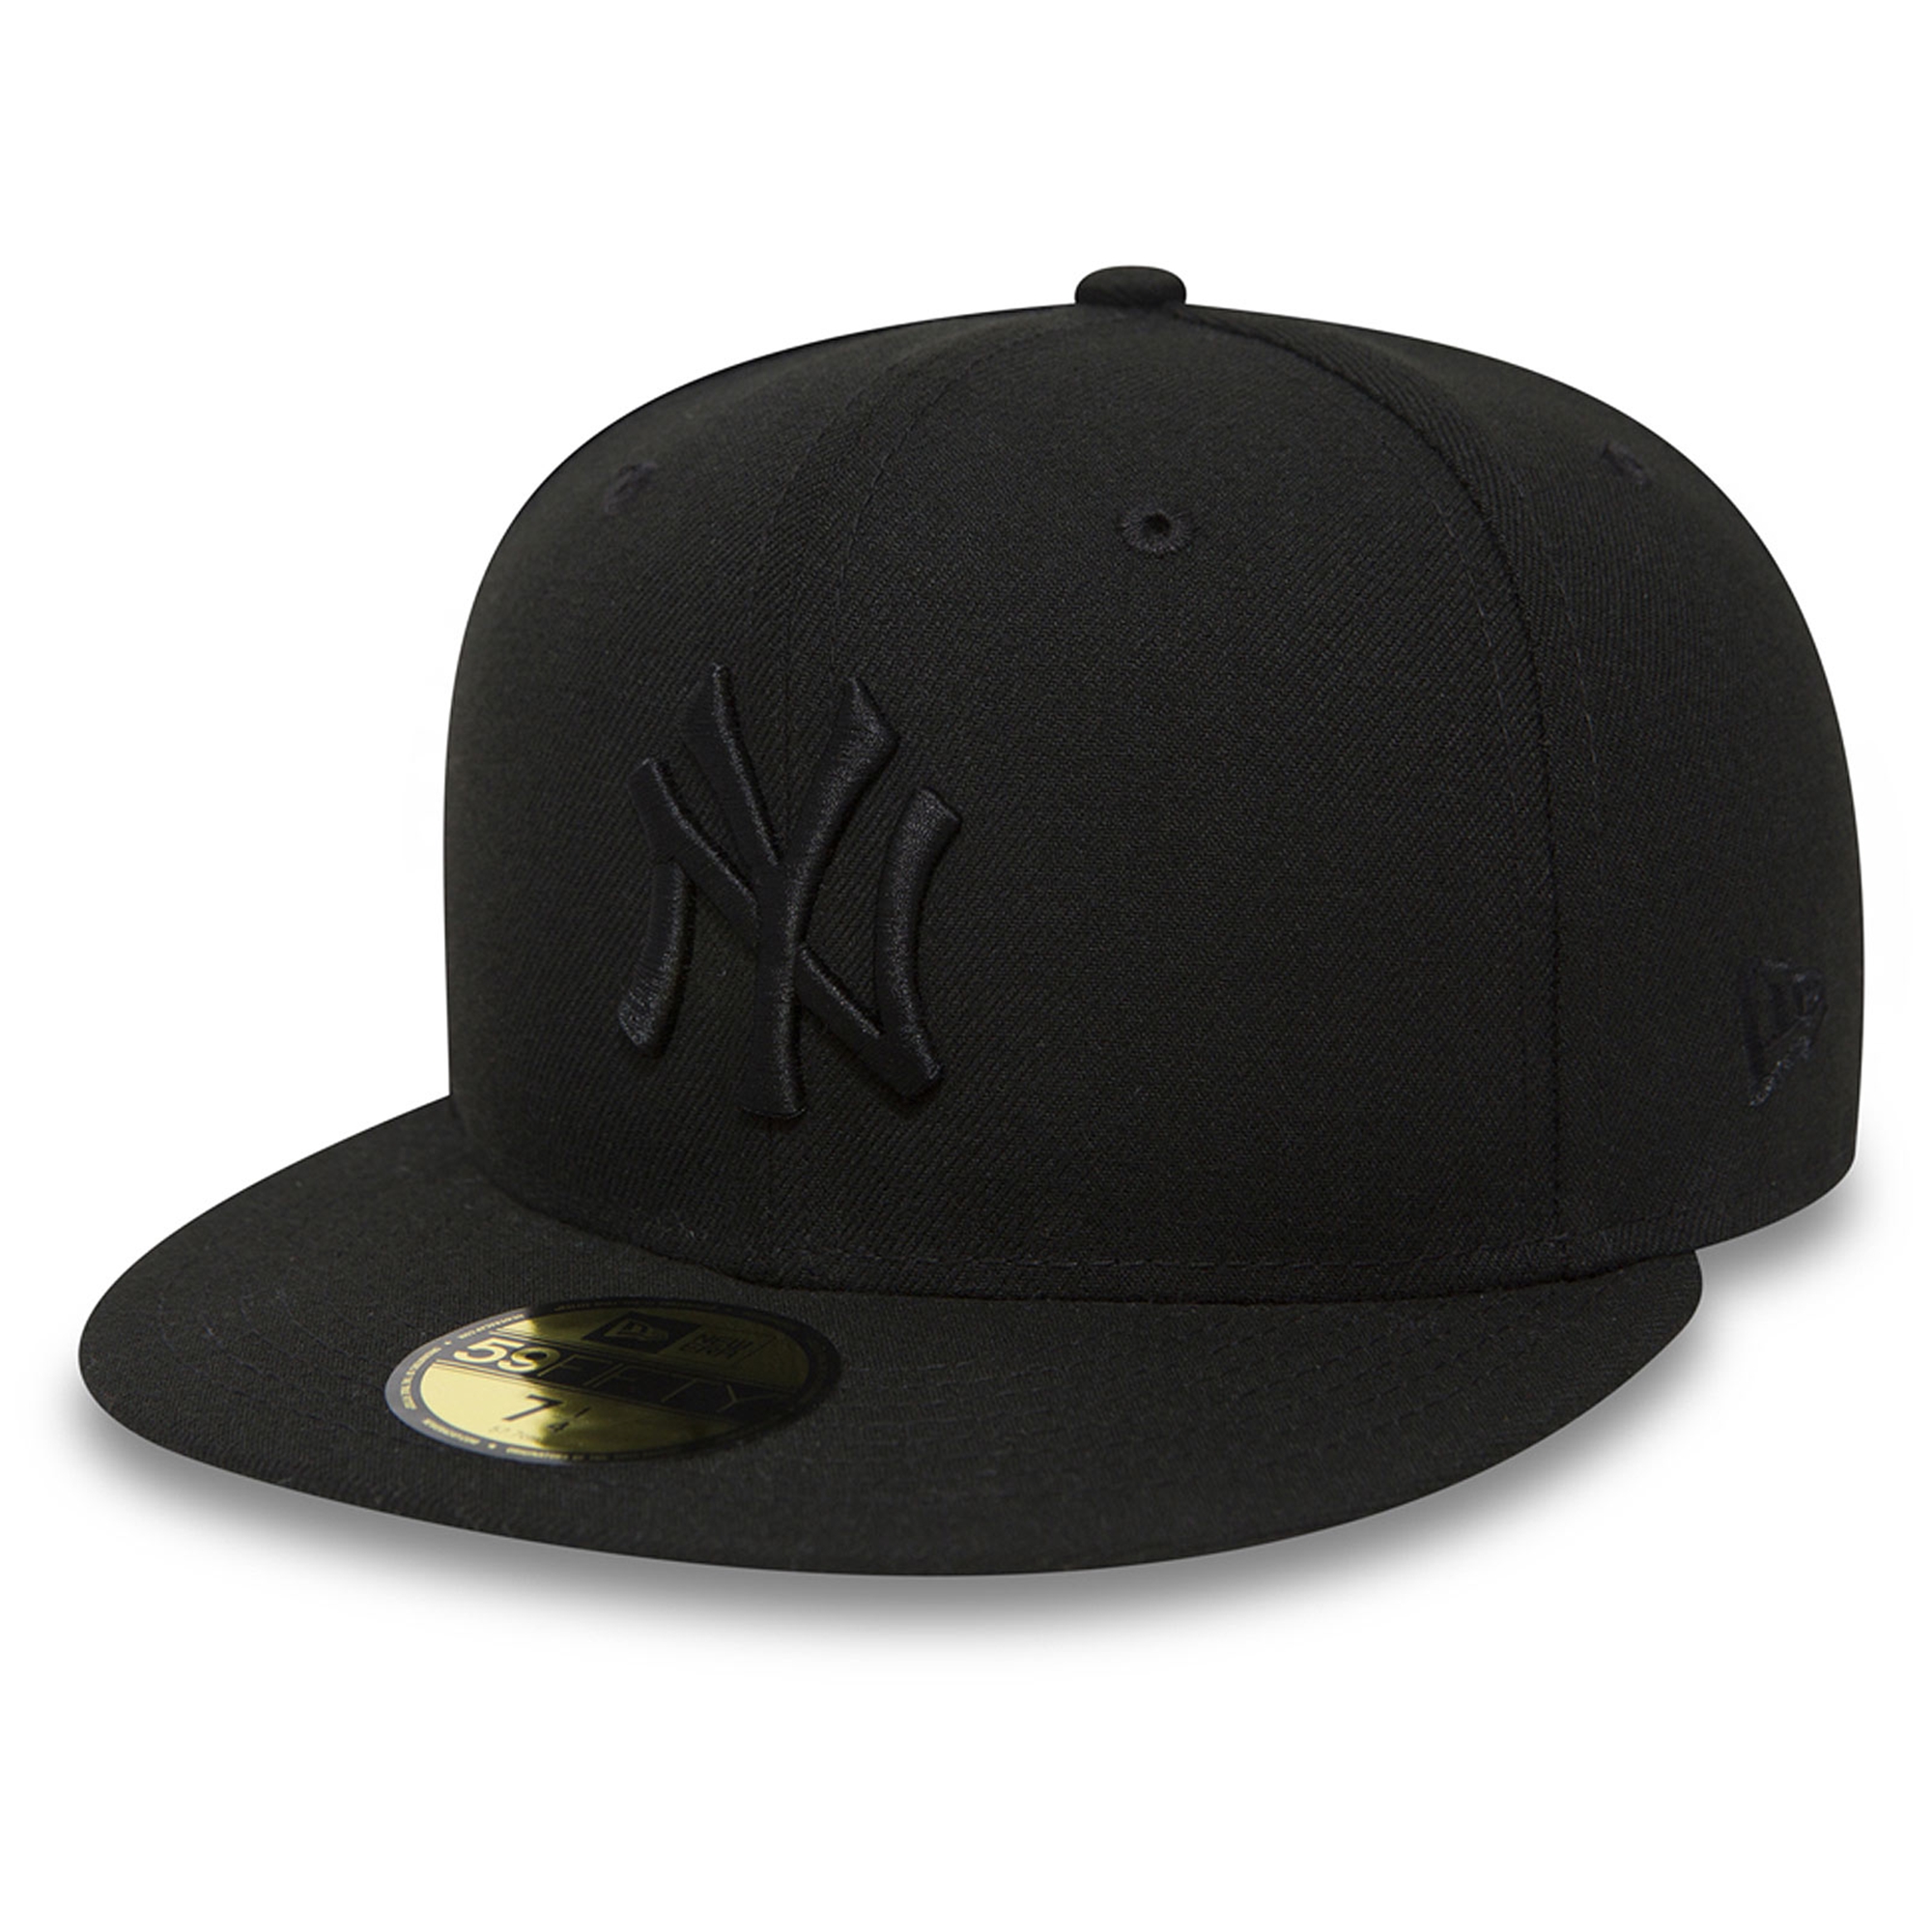 New Era Cap 59Fifty Fitted New York Yankees Basecap MLB Baseball Cap | eBay